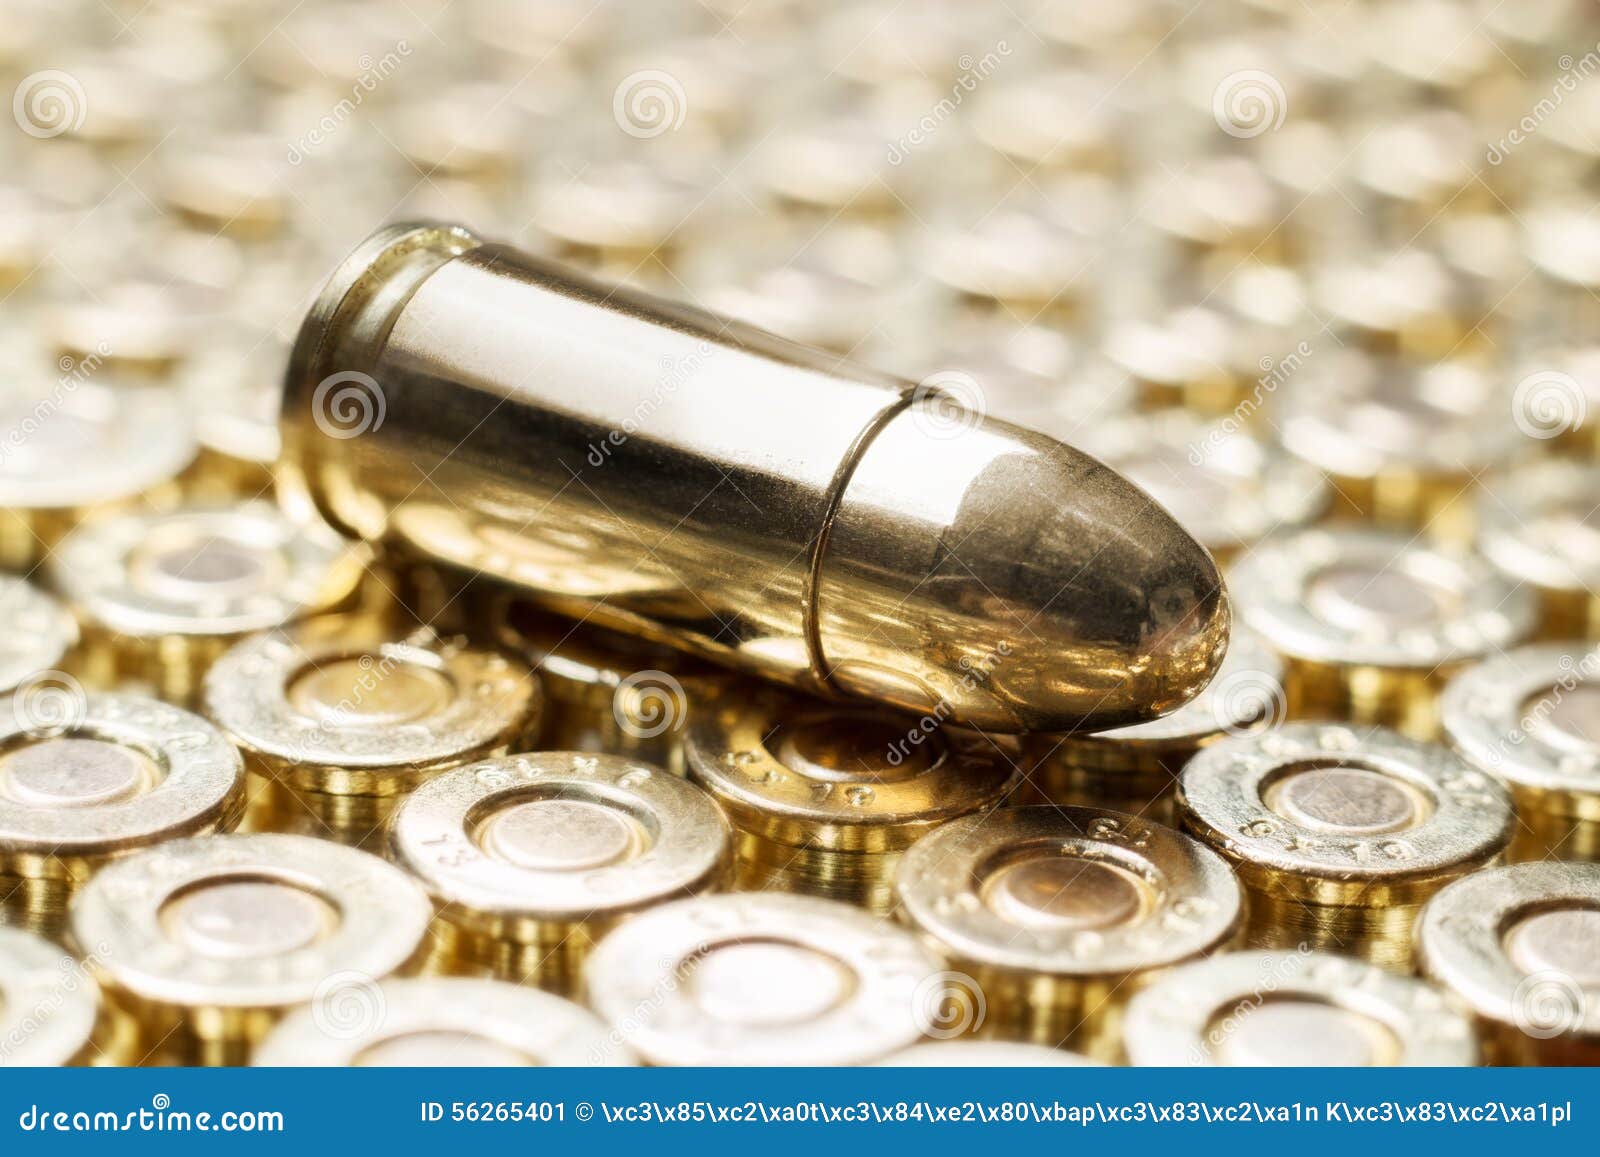 golden bullets